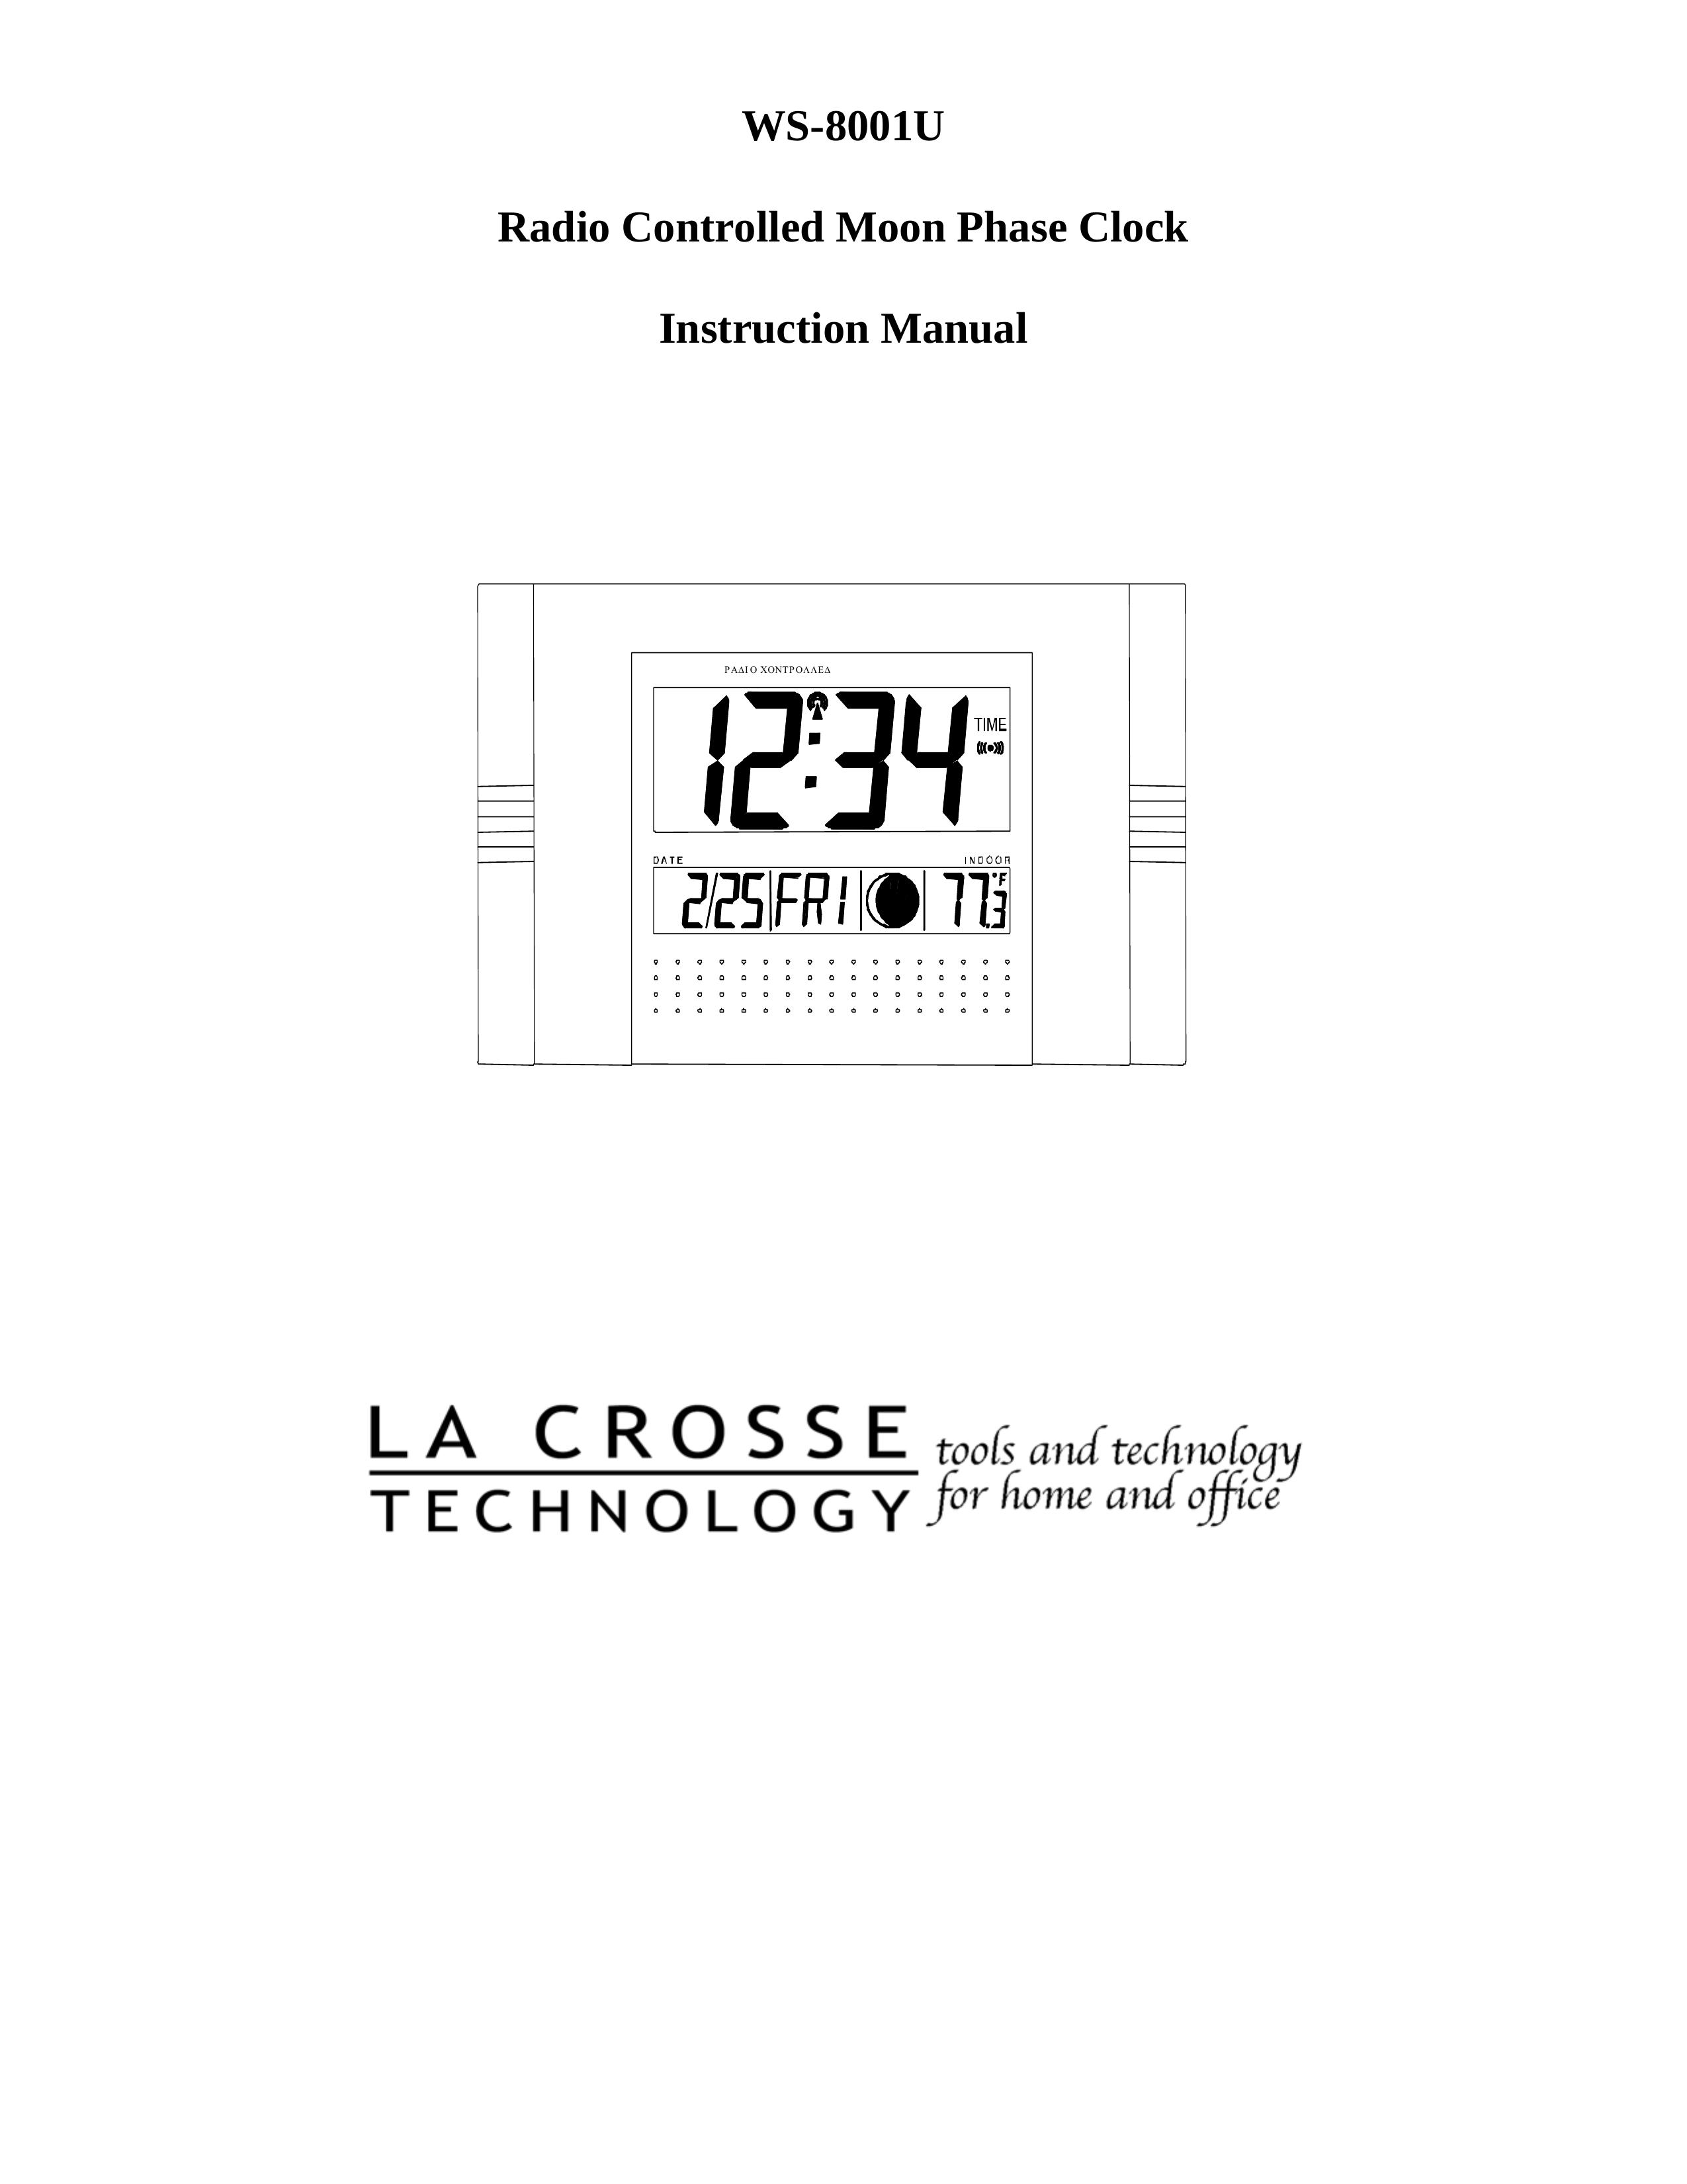 La Crosse Technology WS-8001U Clock Radio User Manual